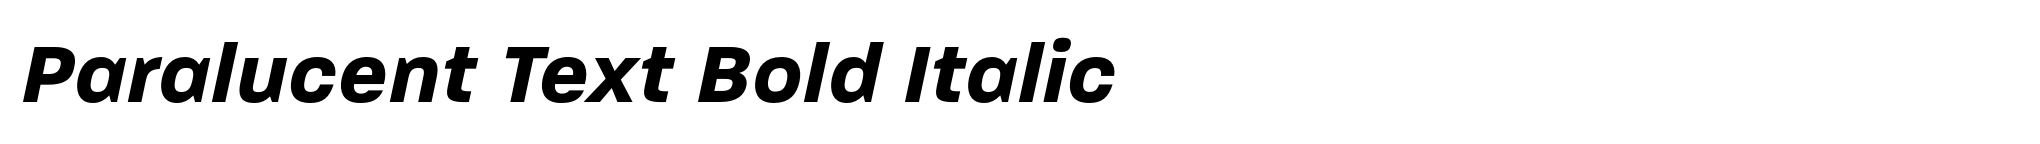 Paralucent Text Bold Italic image